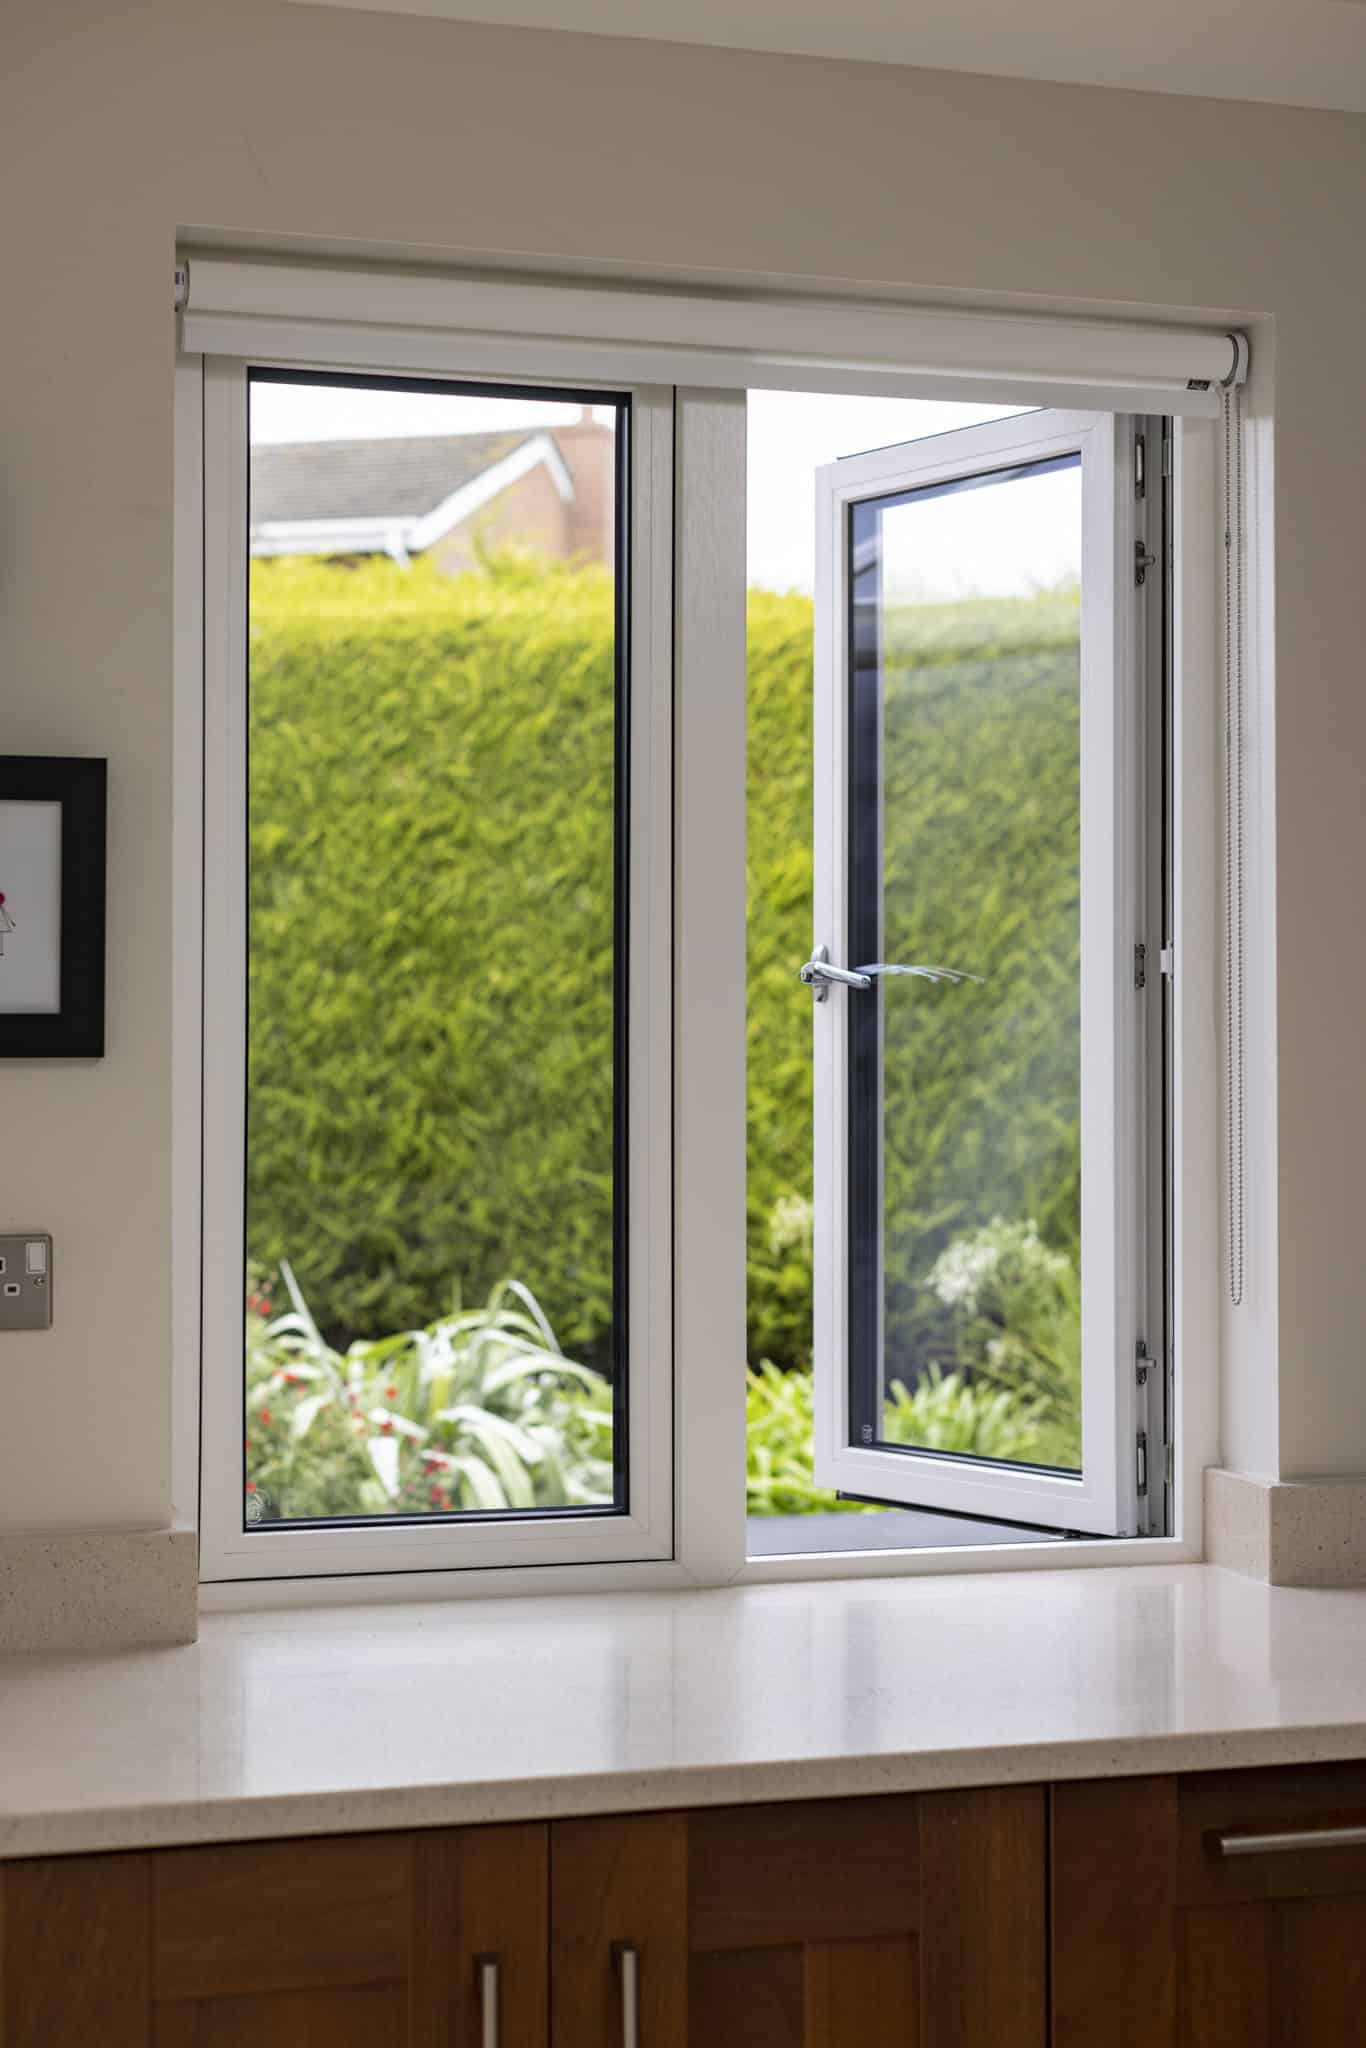 Finesse Frame energy saving windows